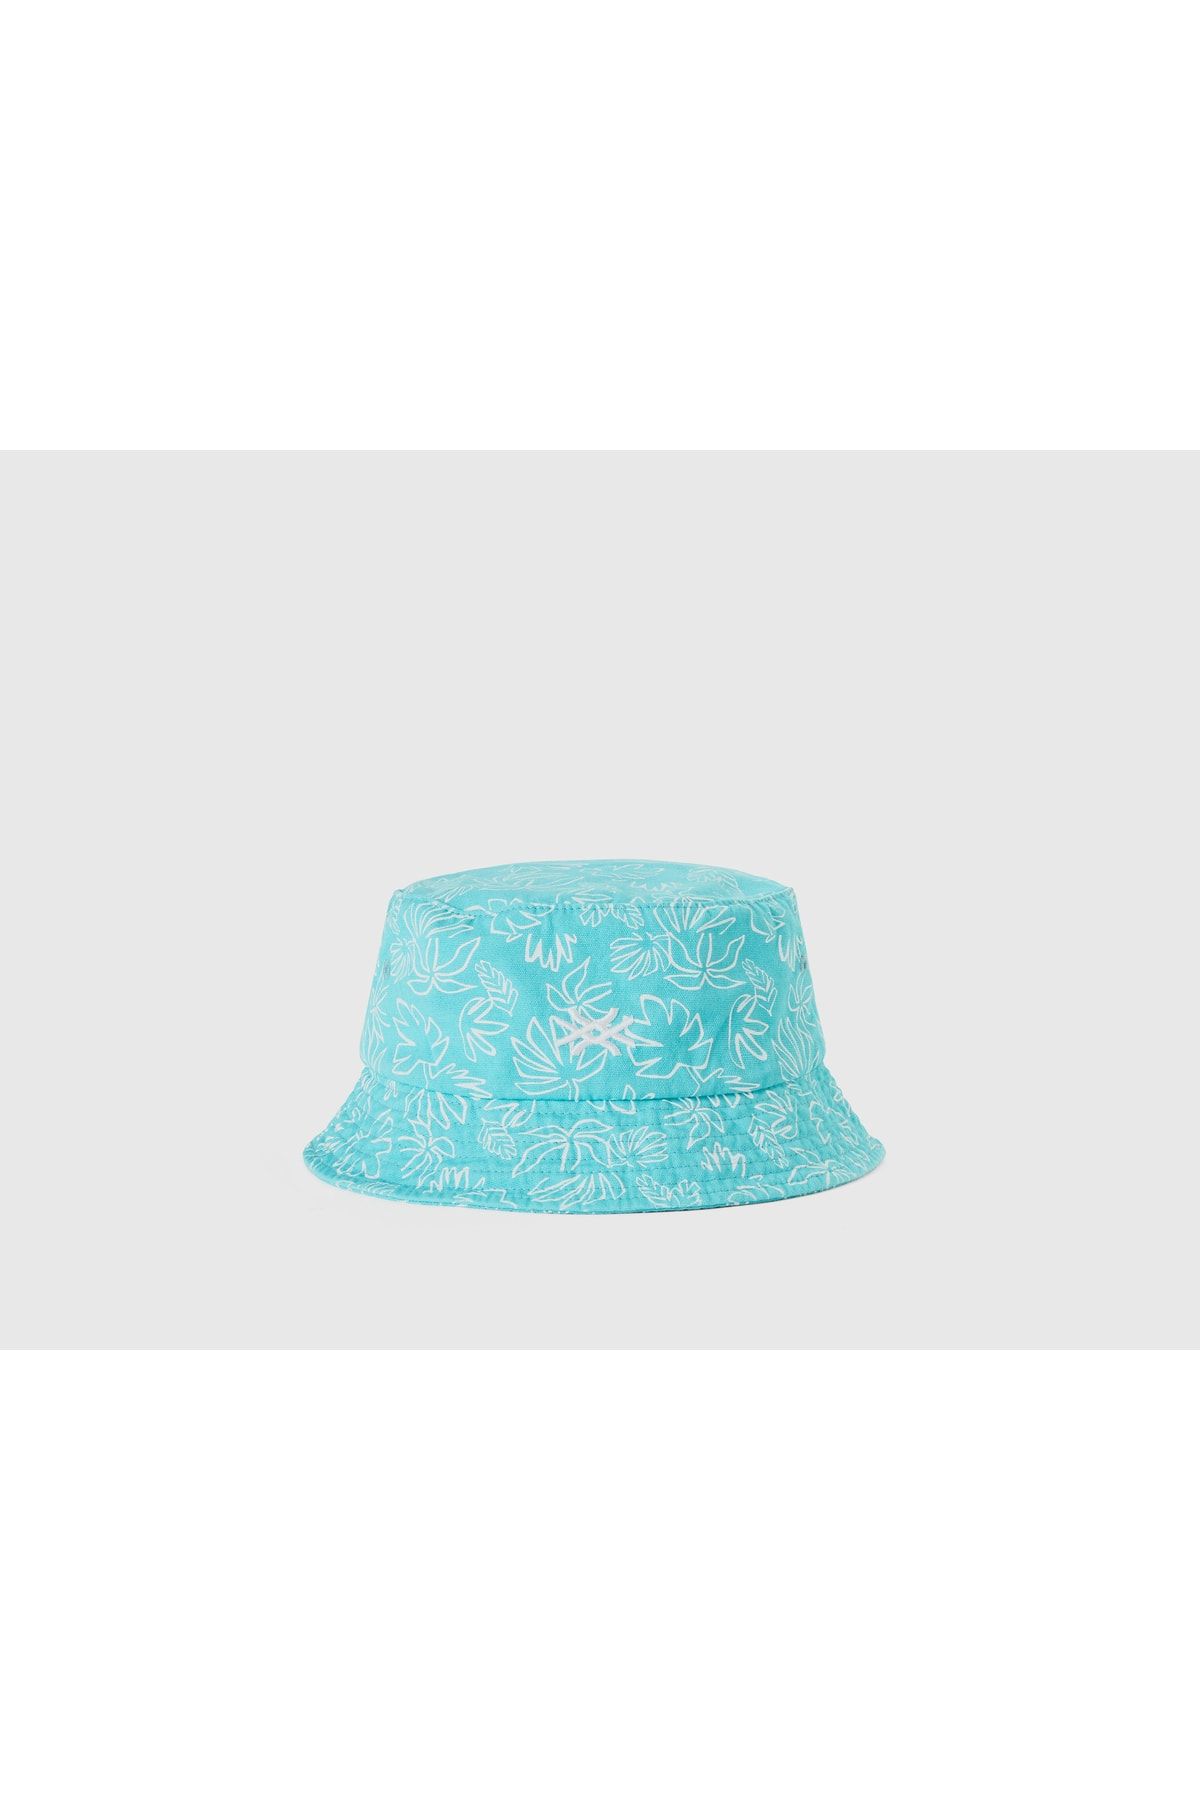 United Colors of Benetton کلاه ماهیگیر با آرم مخلوط پسر الگوی گورخر